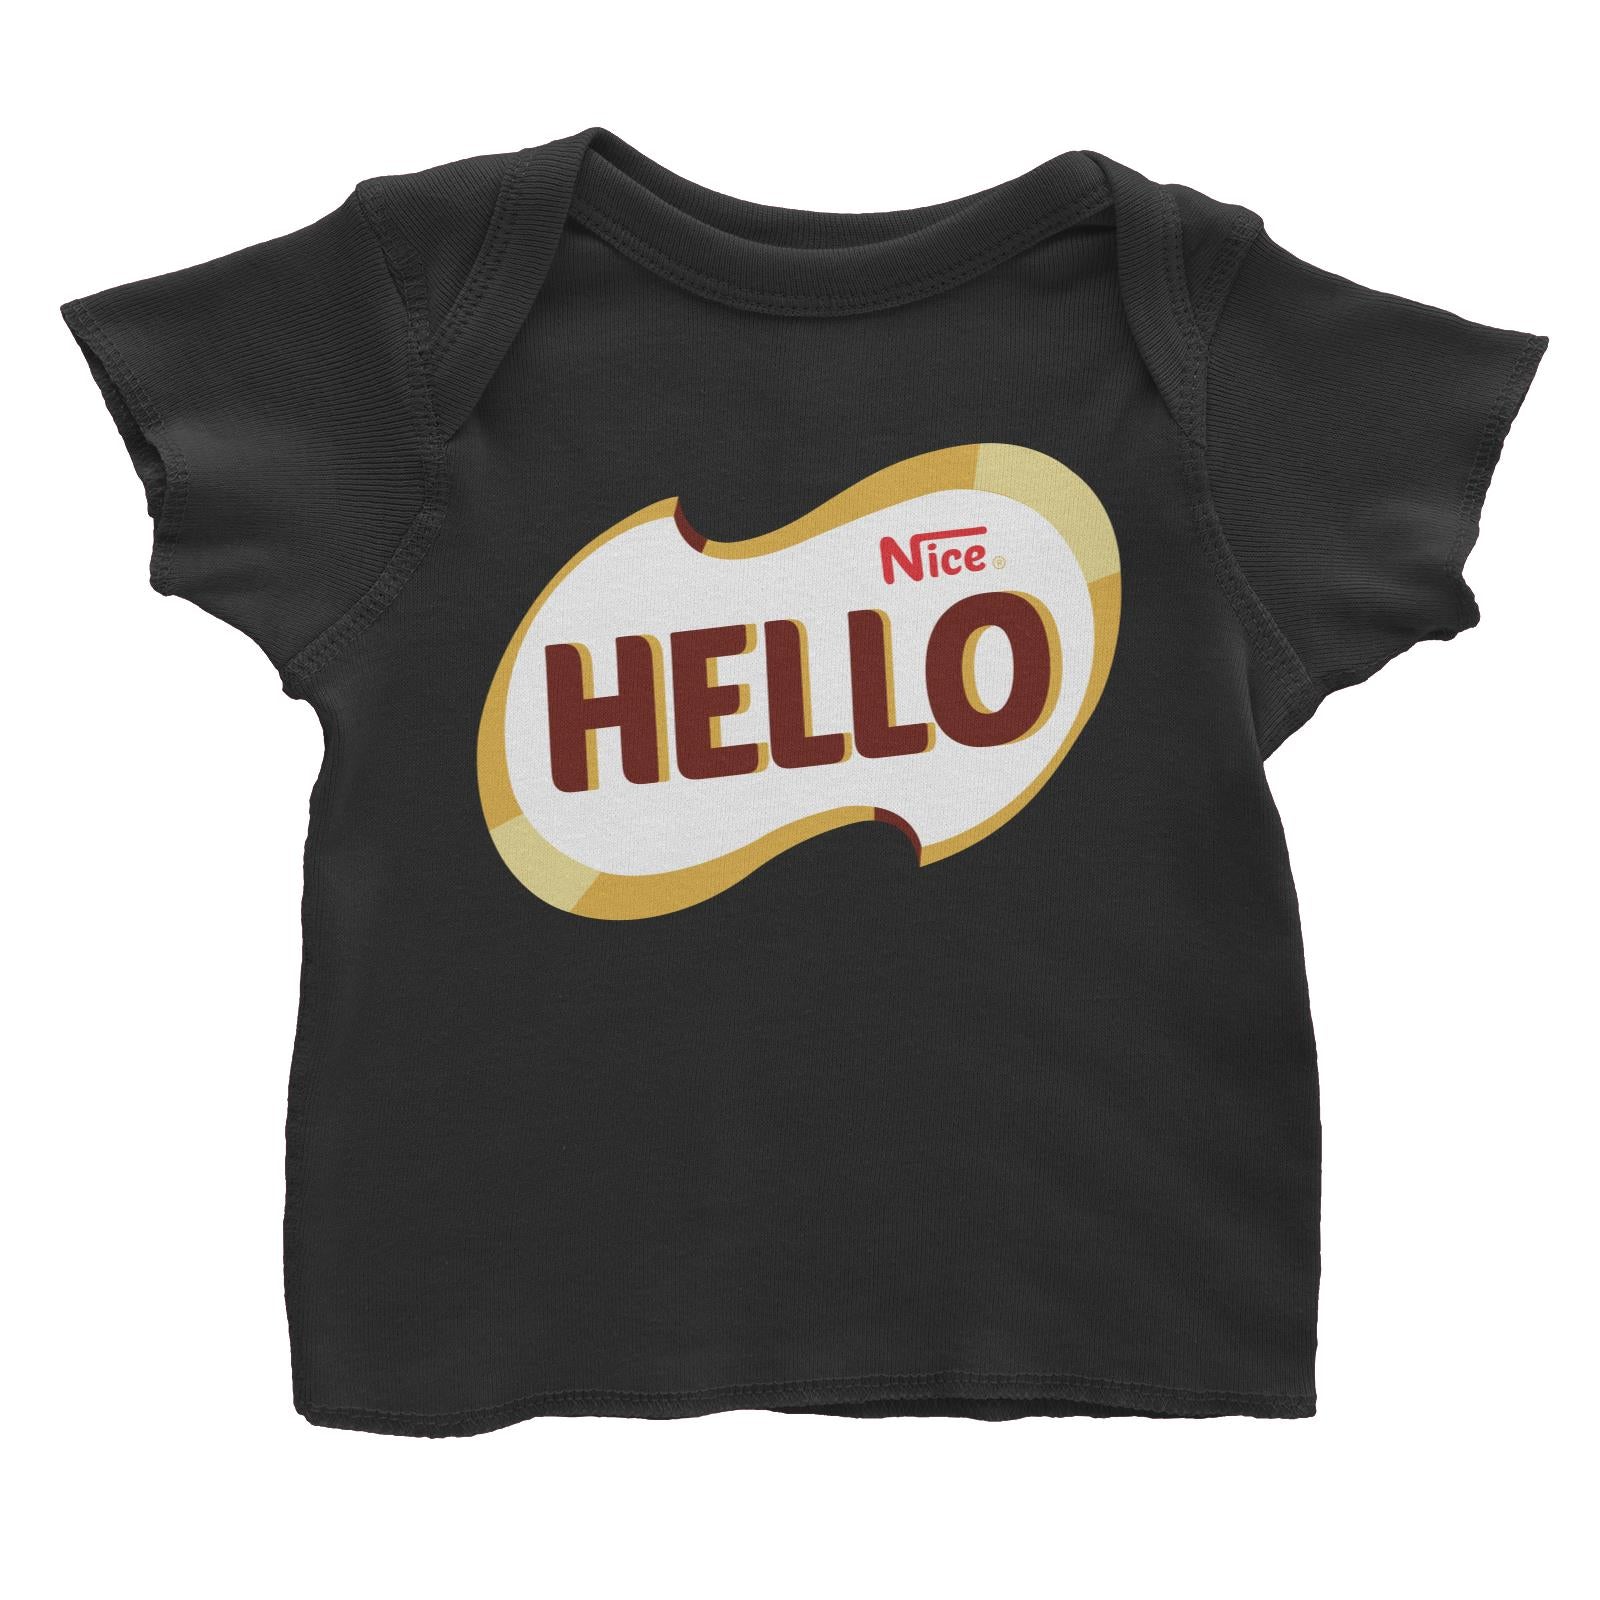 Slang Statement Hello Nice Baby T-Shirt